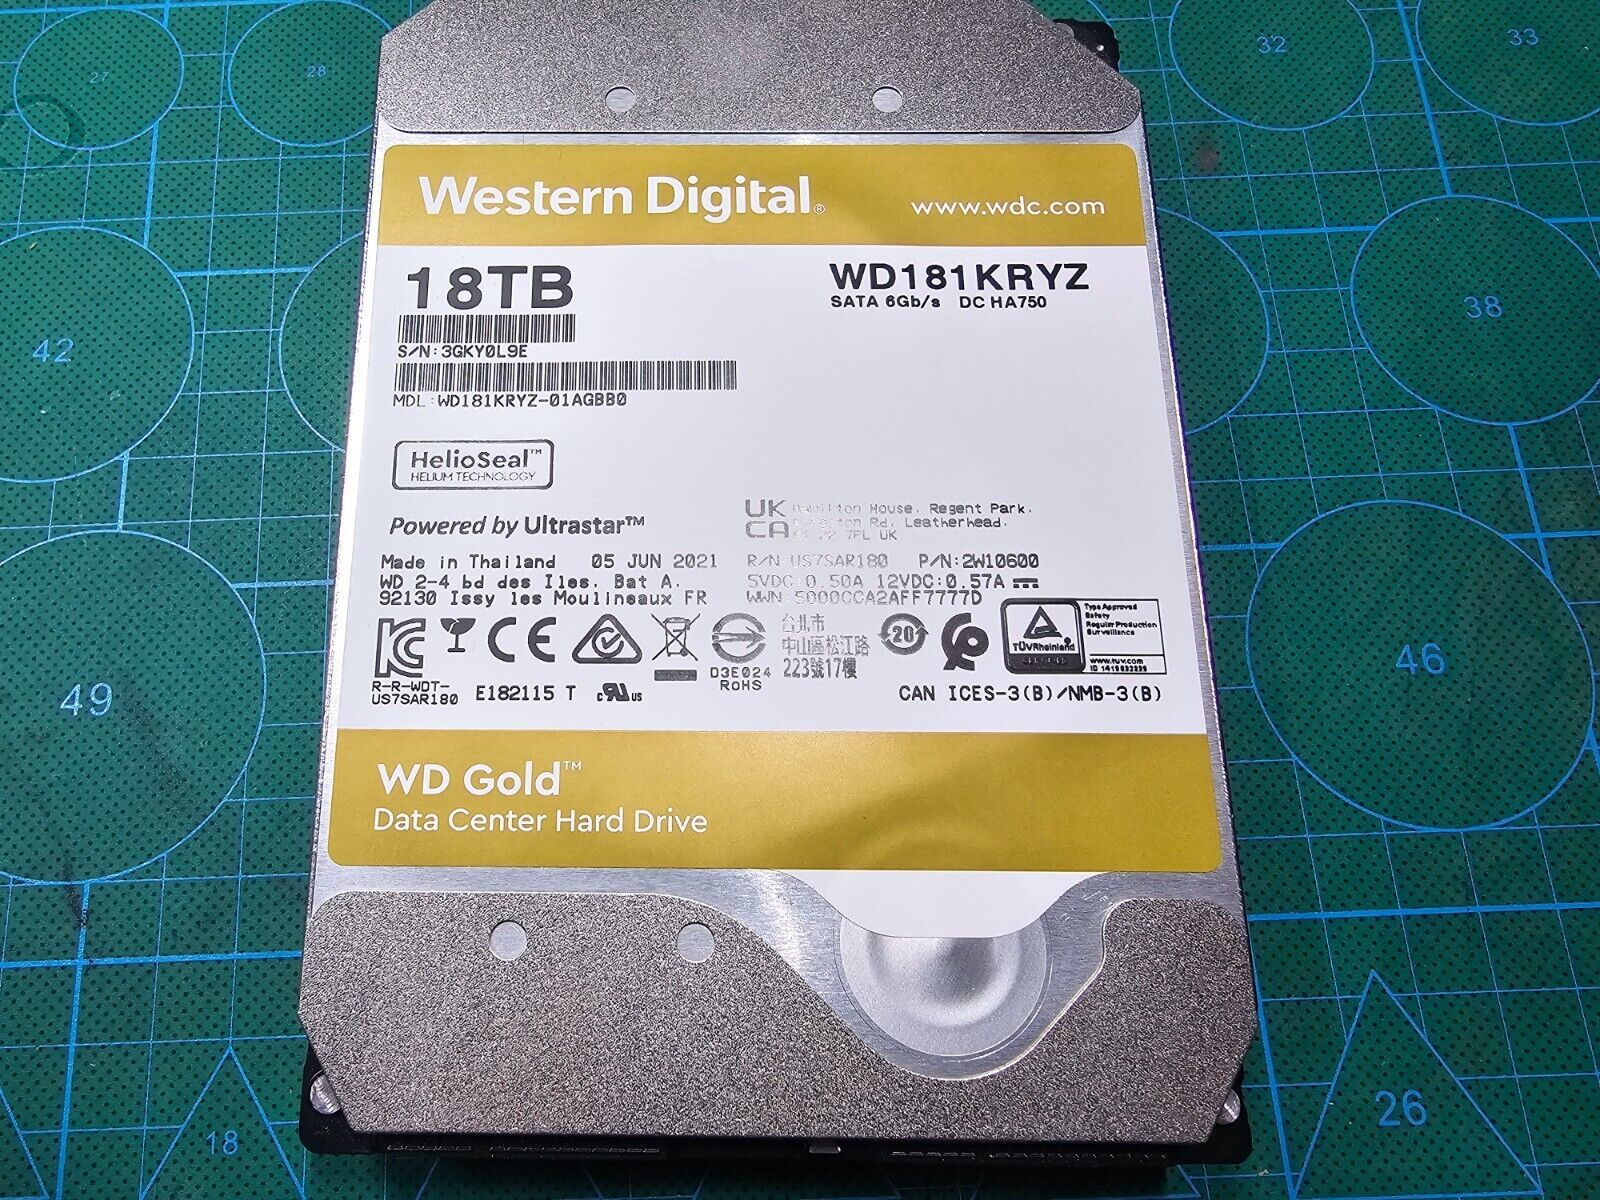 WD Gold WD181KRYZ Enterprise Class 18TB 7200RPM SATA 512MB Cache 3.5inch HDD